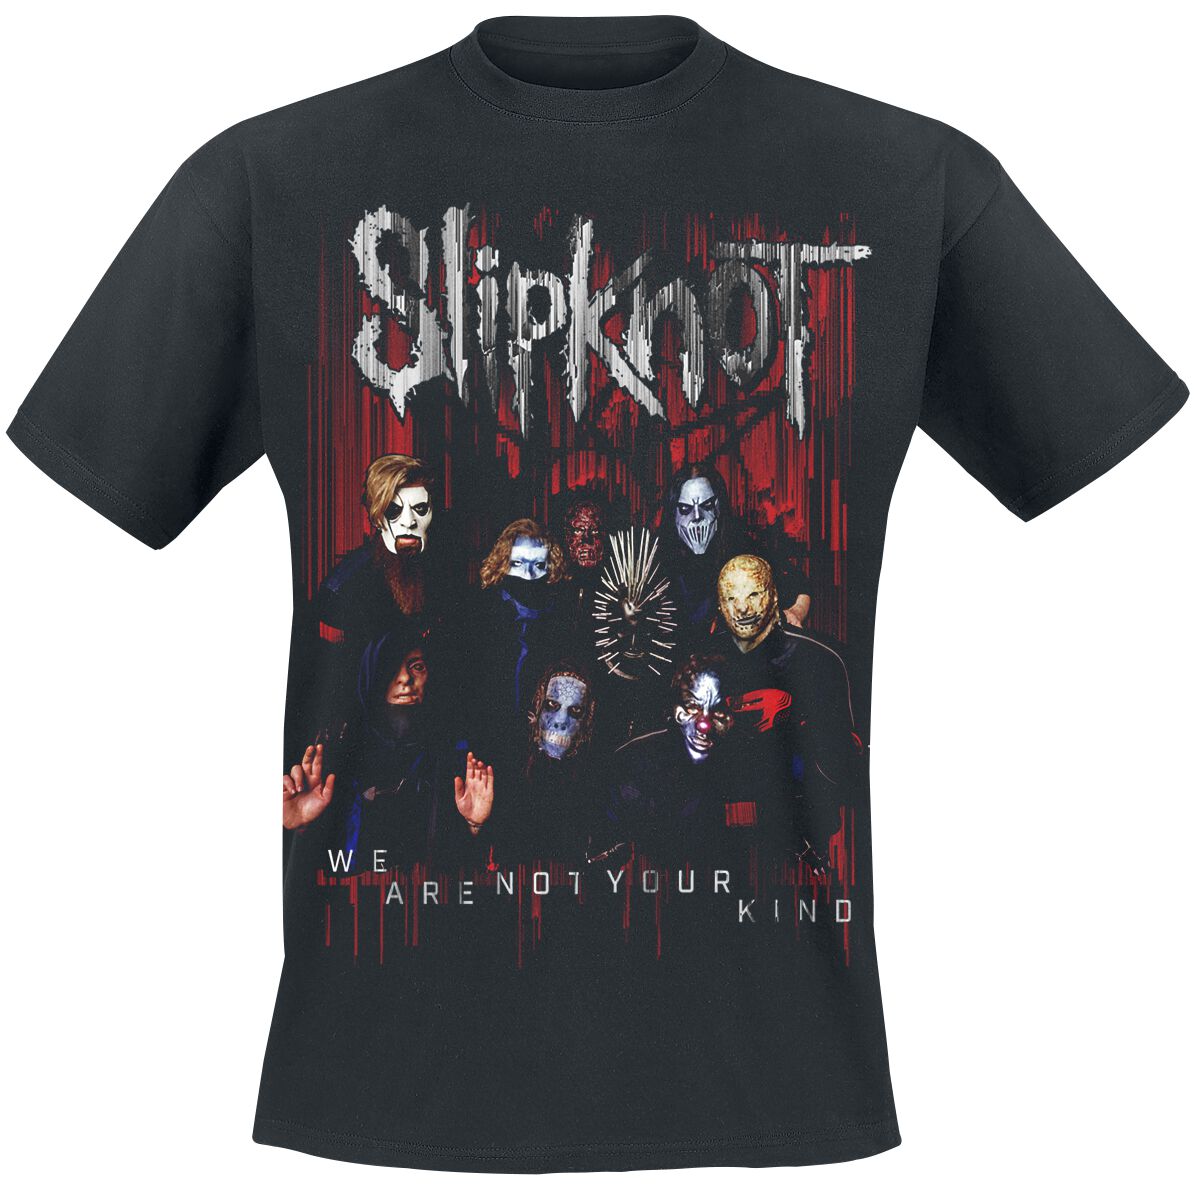 Slipknot Group Photo T-Shirt schwarz in S von Slipknot